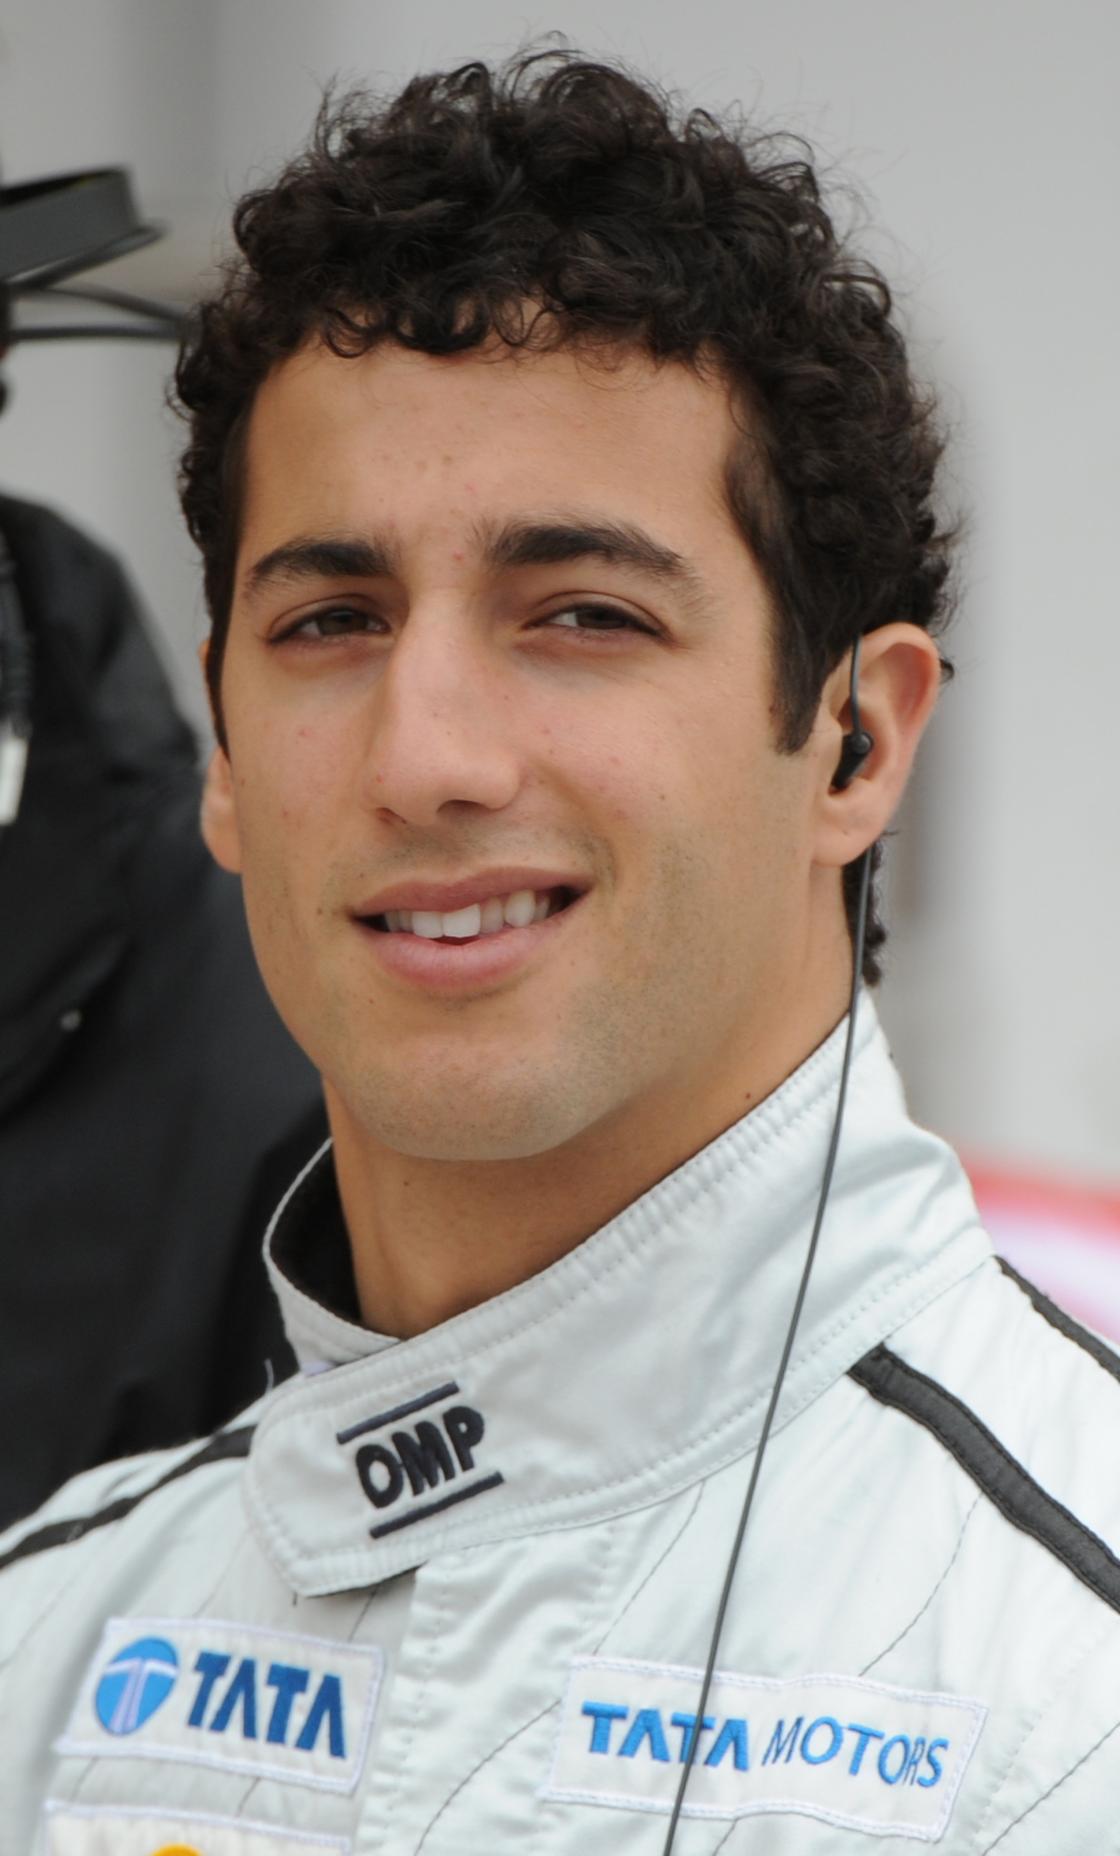 Daniel Ricciardo's height